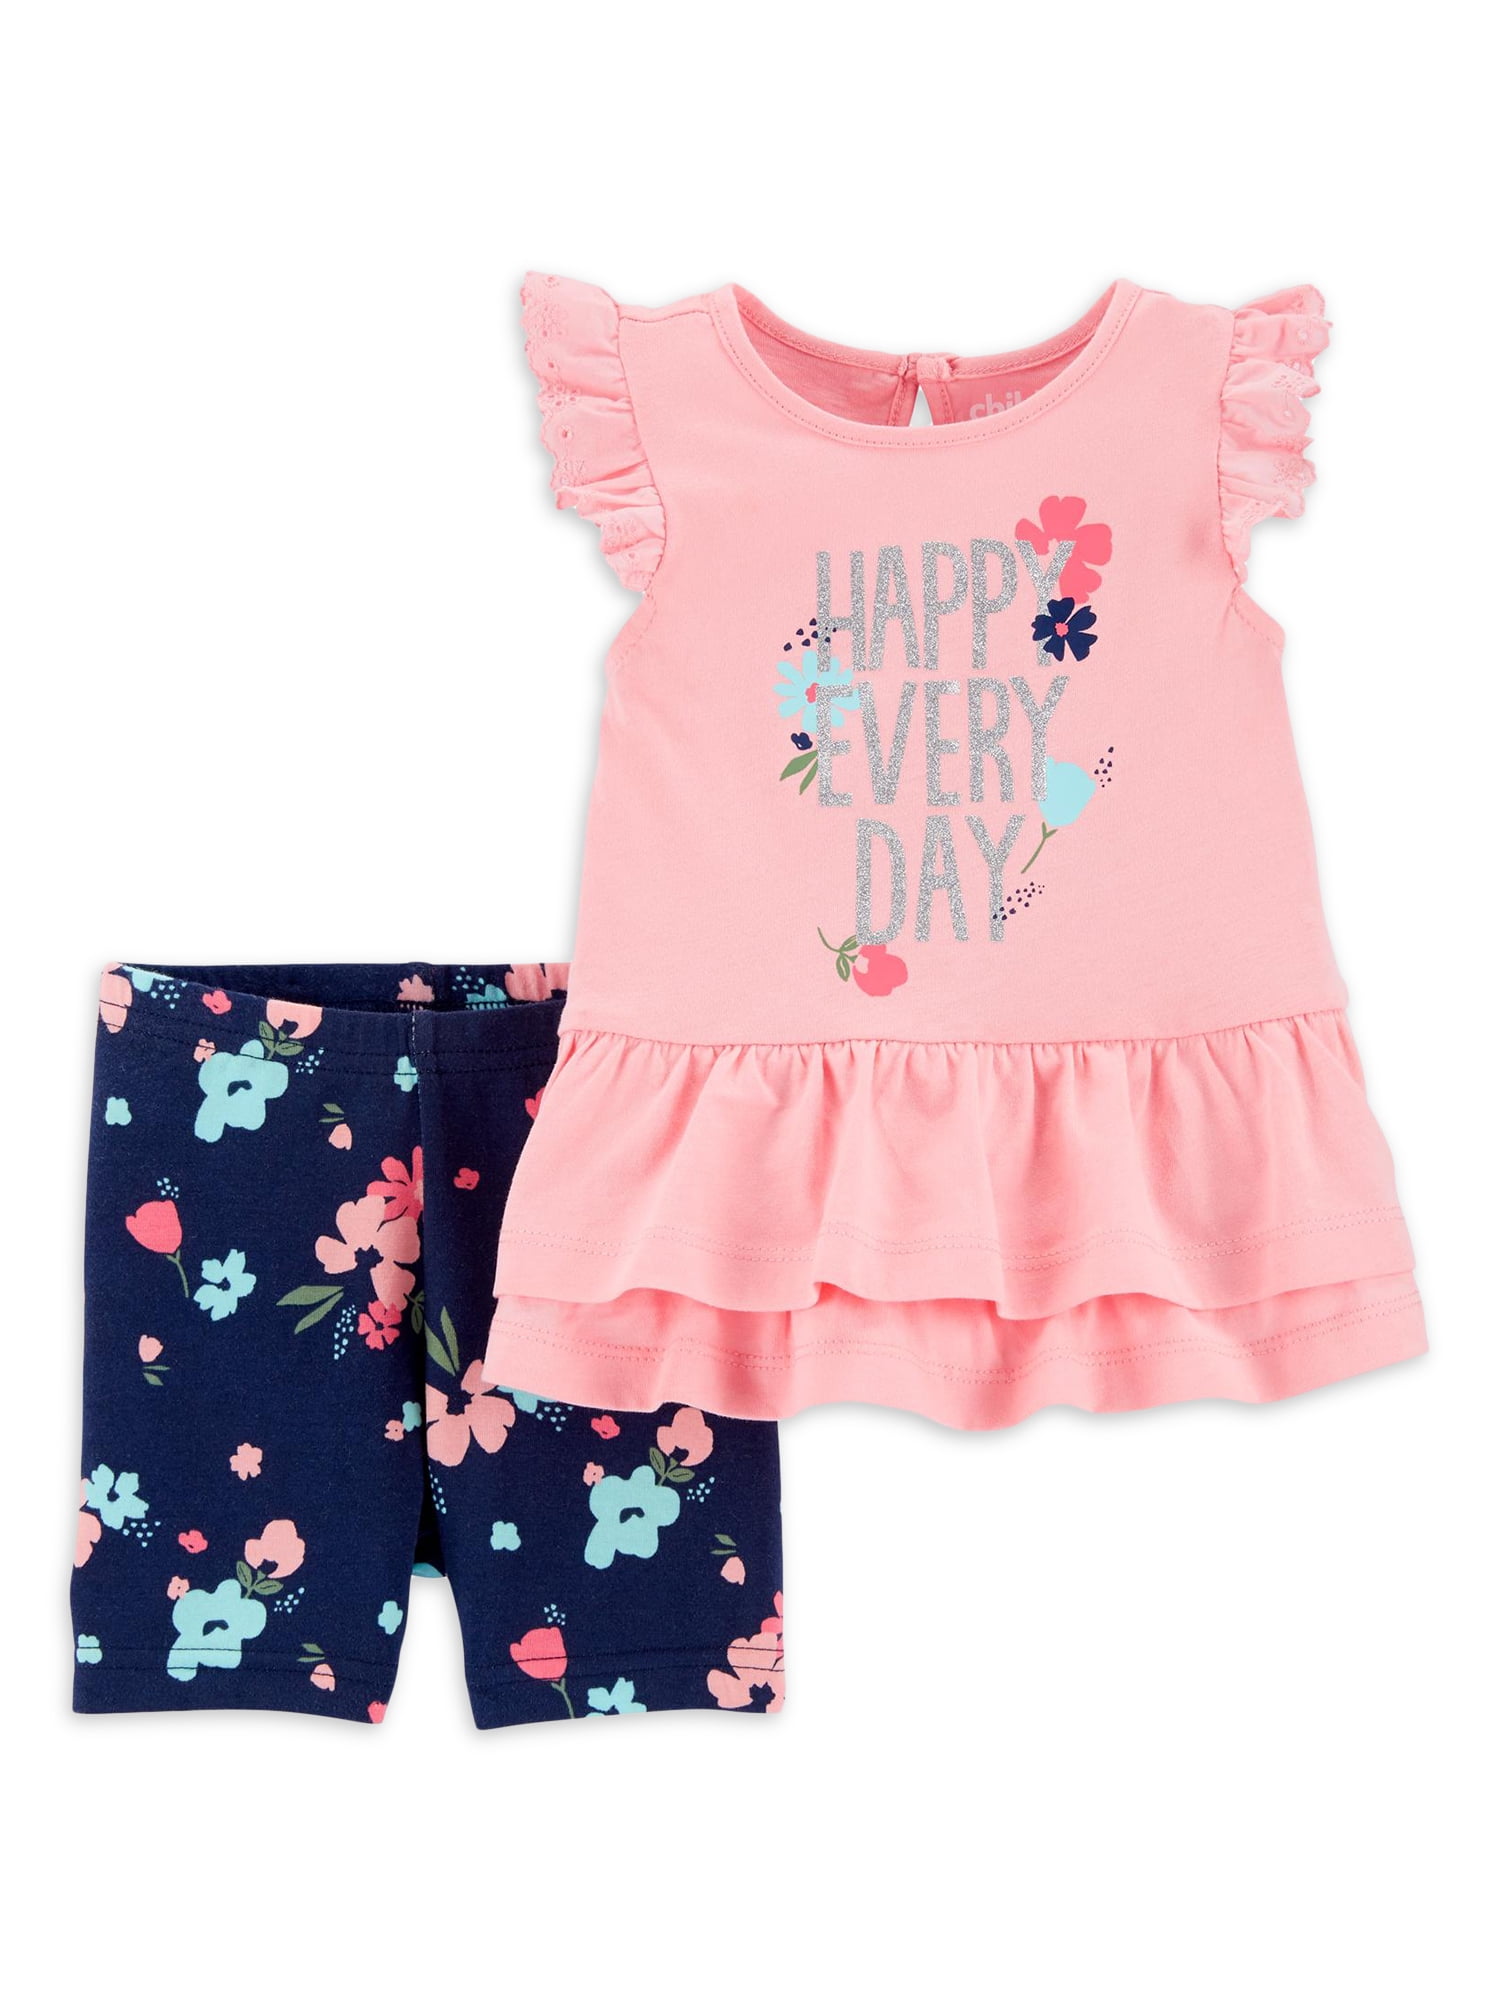 Newborn Baby Girls Summer Clothes Short Sleeve Ruffle T-Shirt Tops Drawstring Shorts Sets Infant Outfit